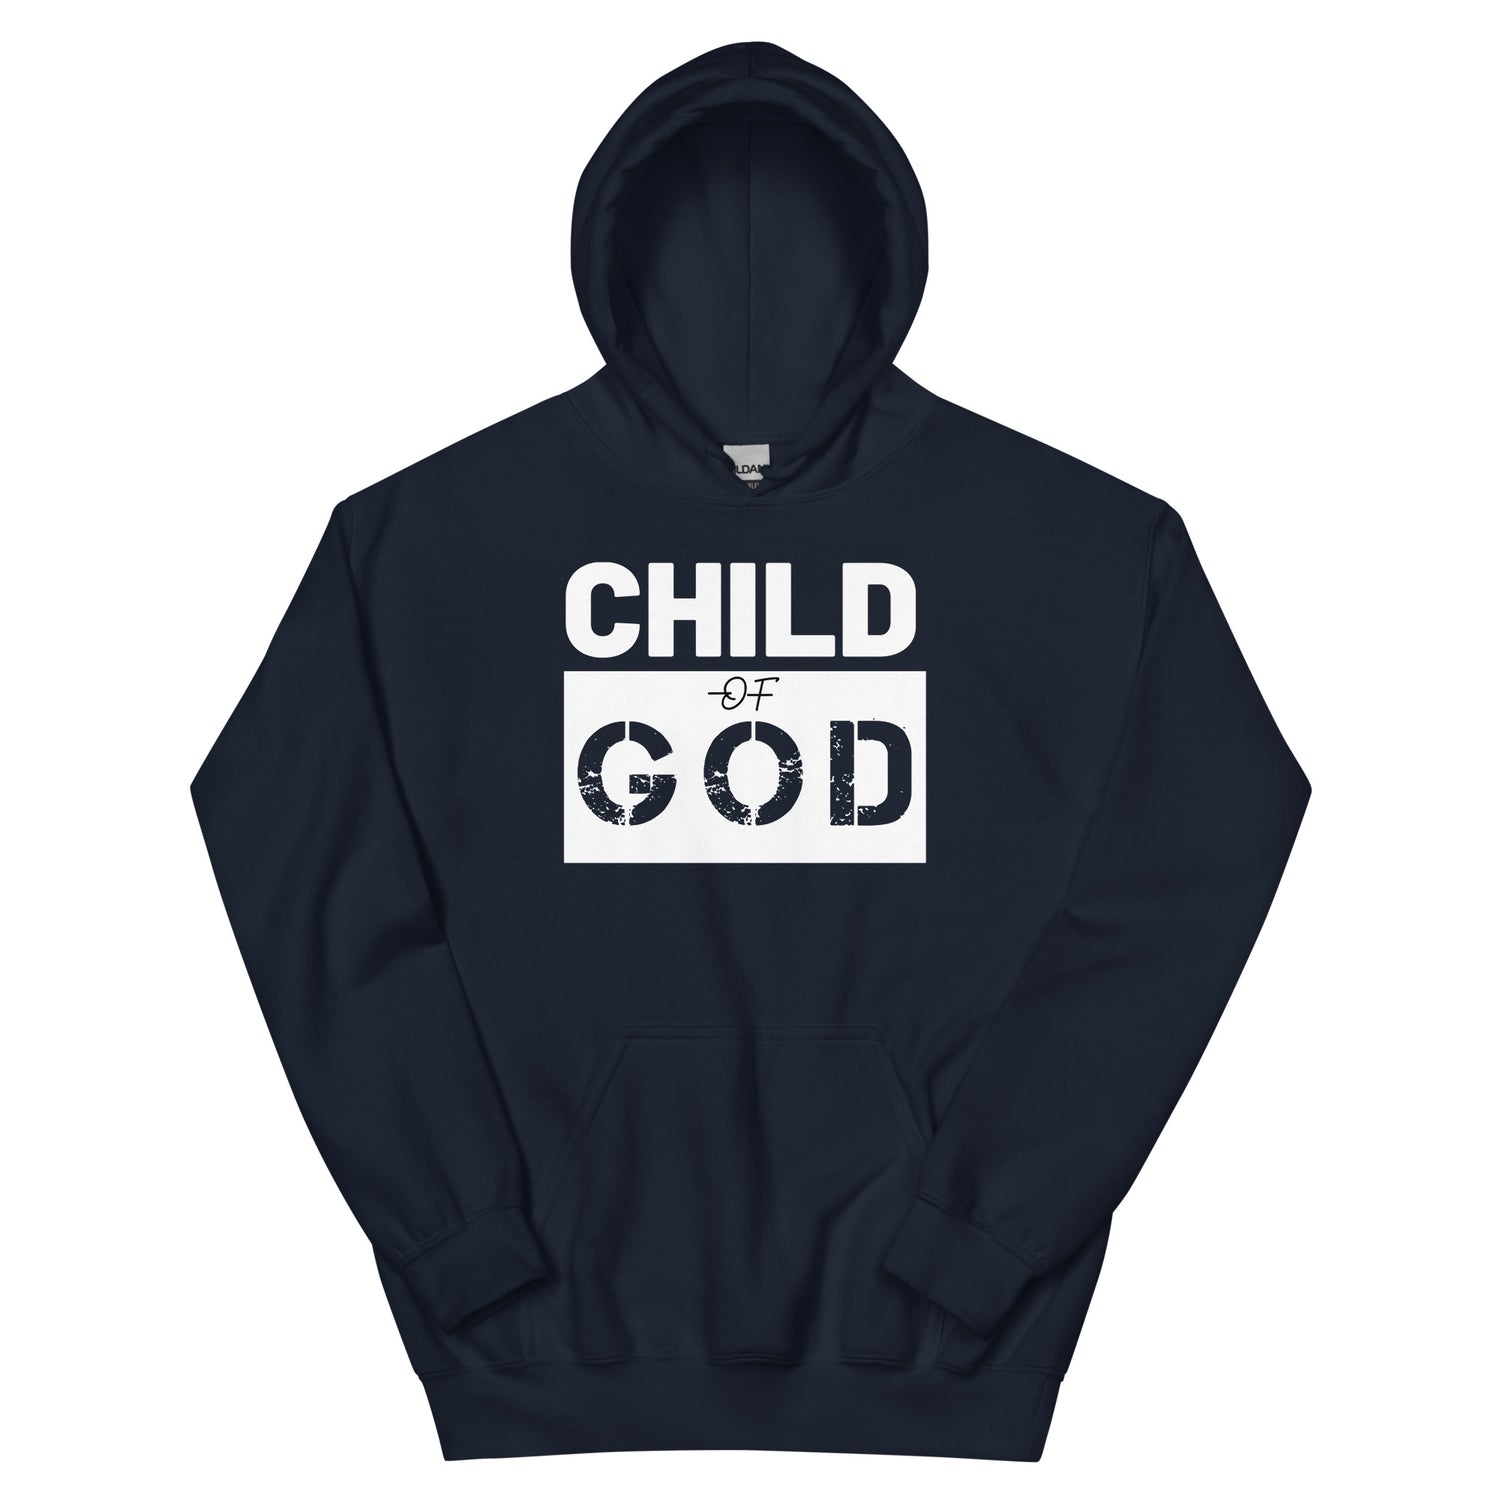 Christian hoodie